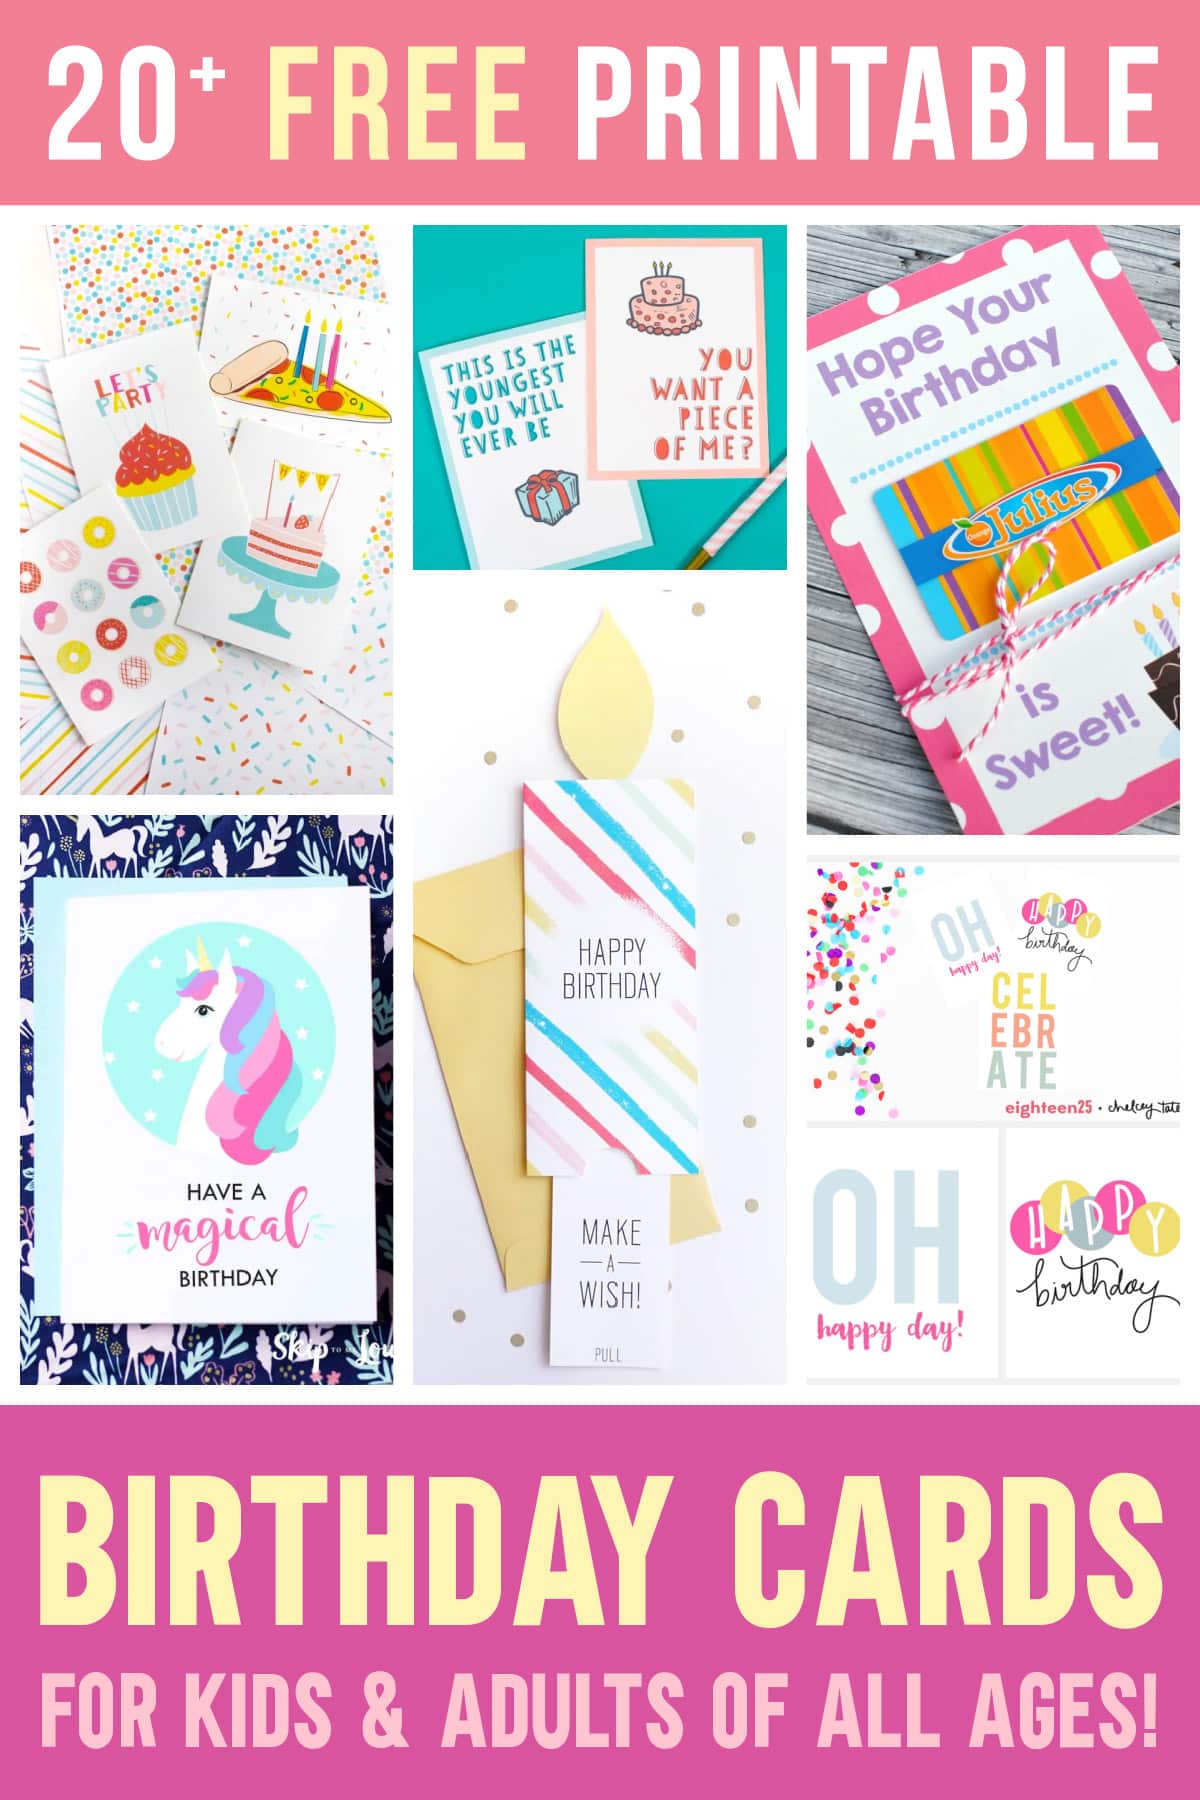 20+ Free Printable Birthday Cards